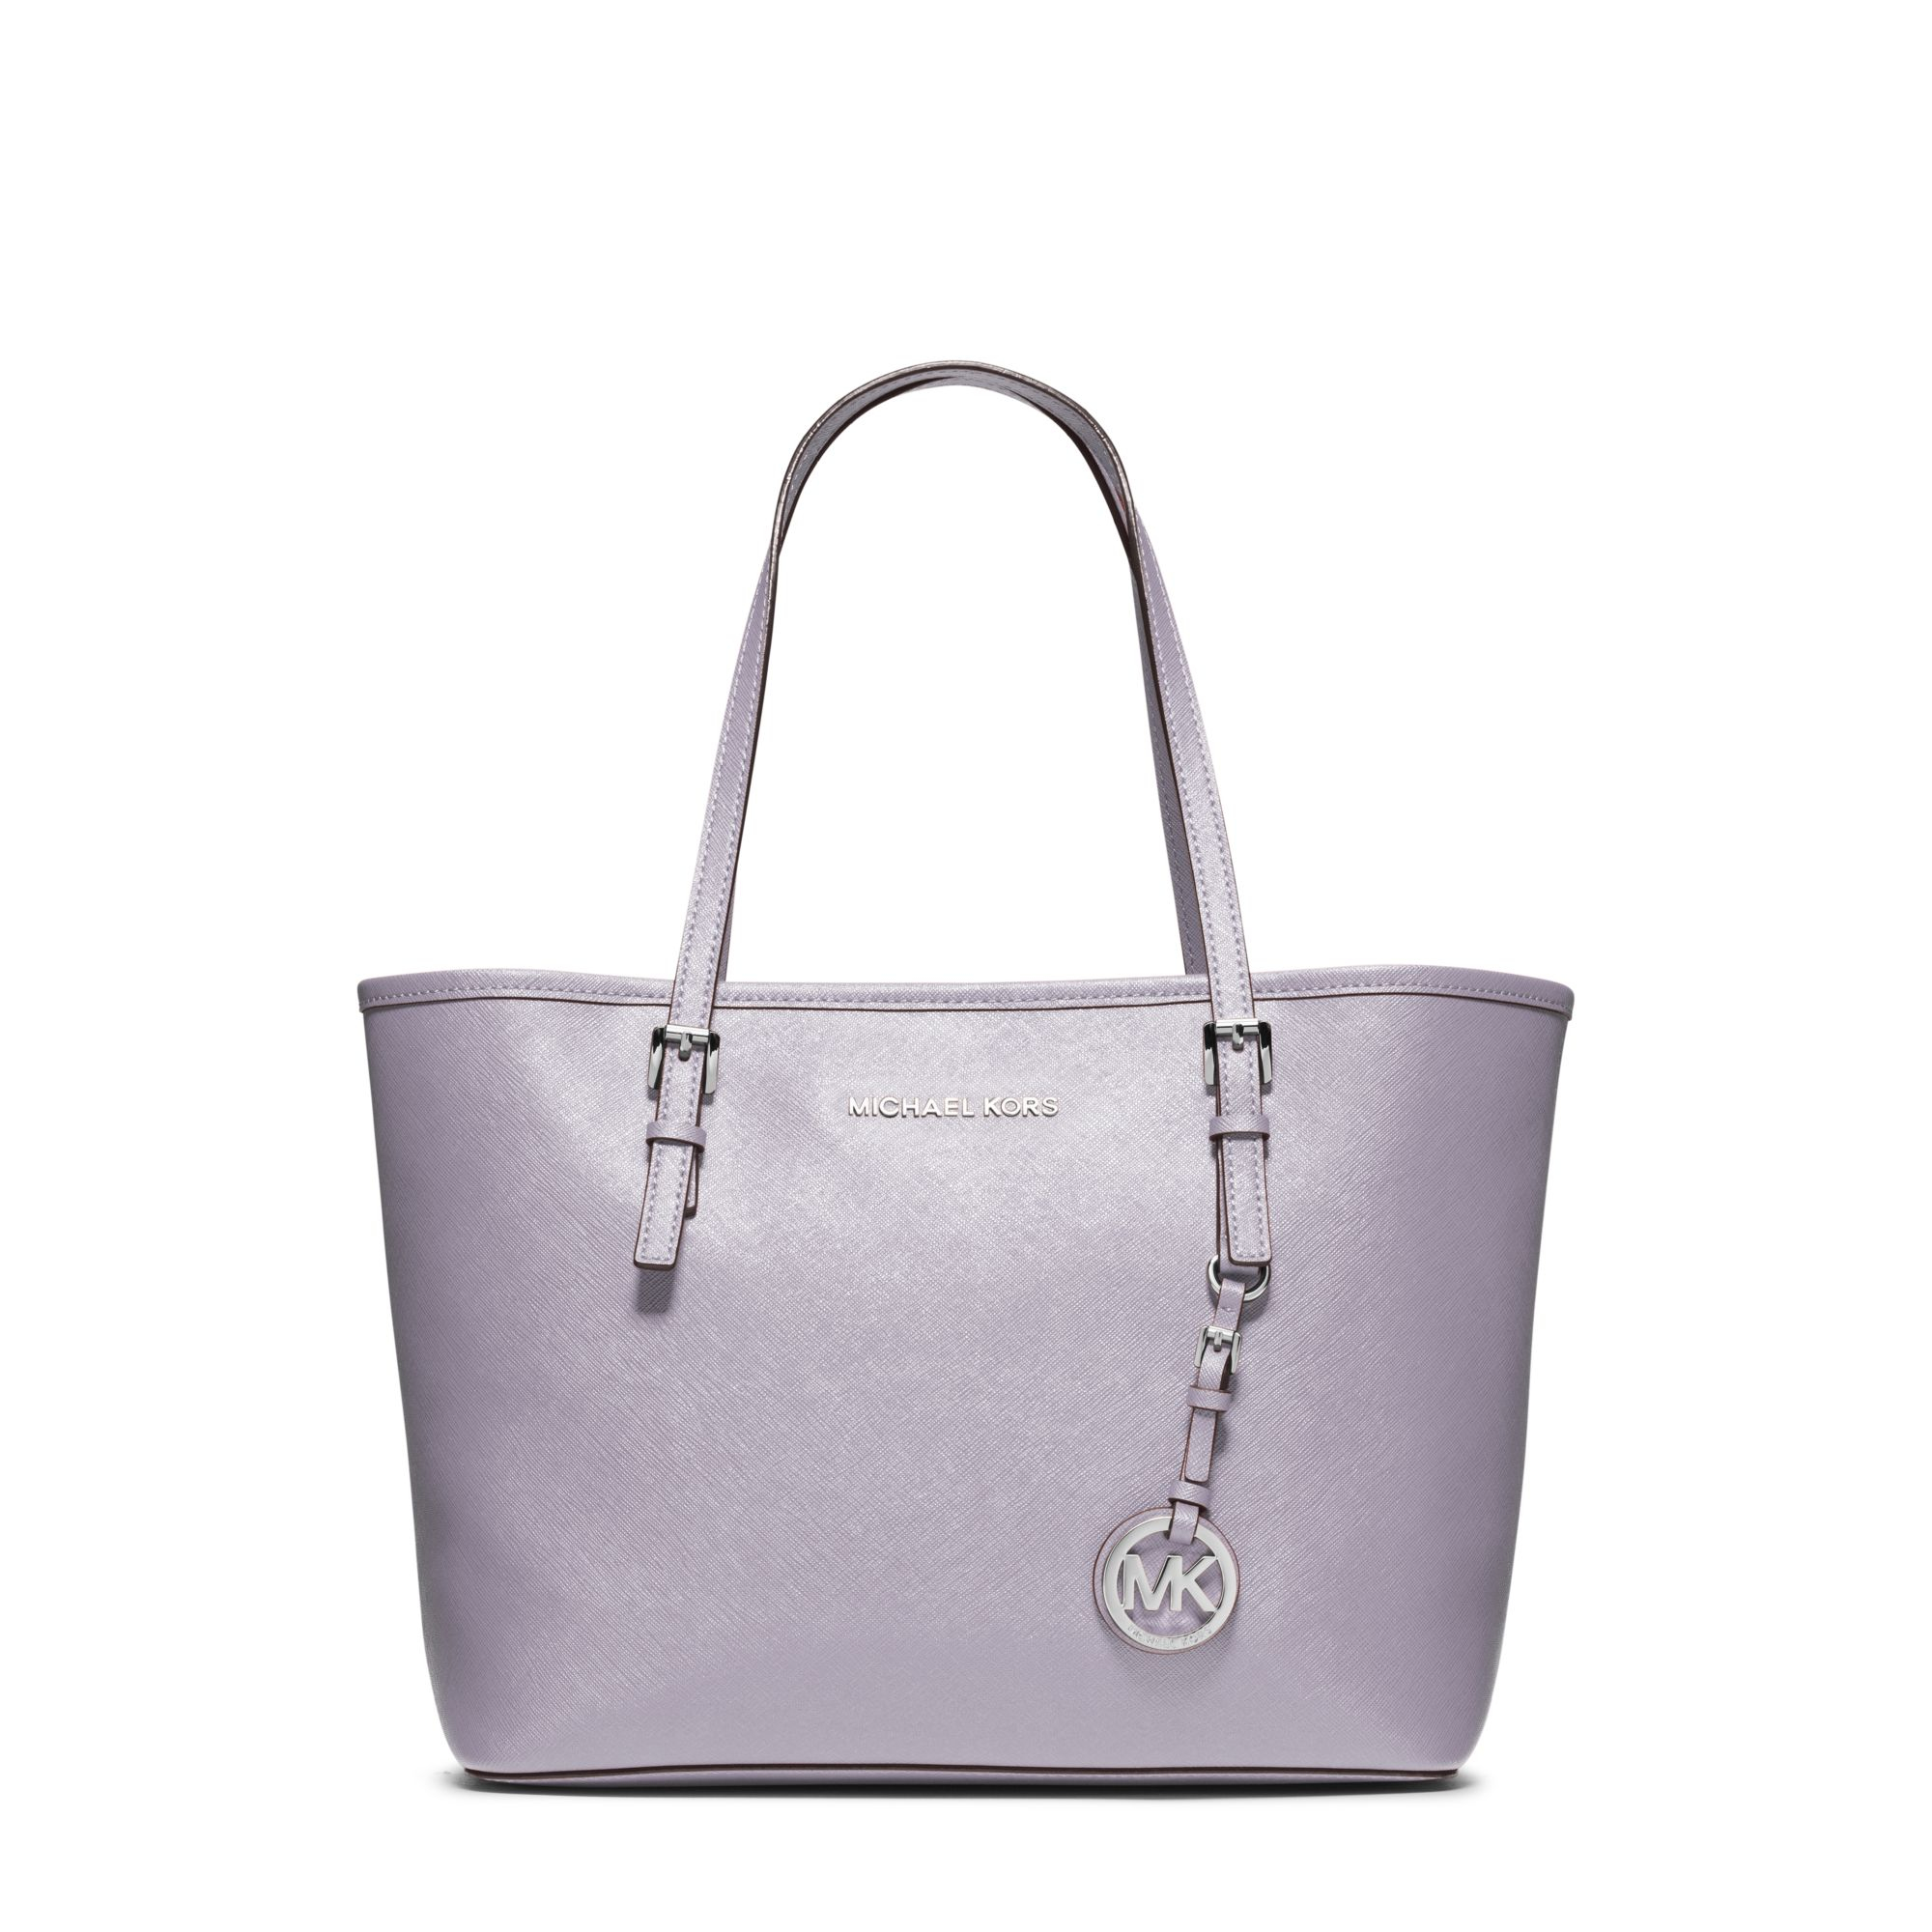 light purple mk purse